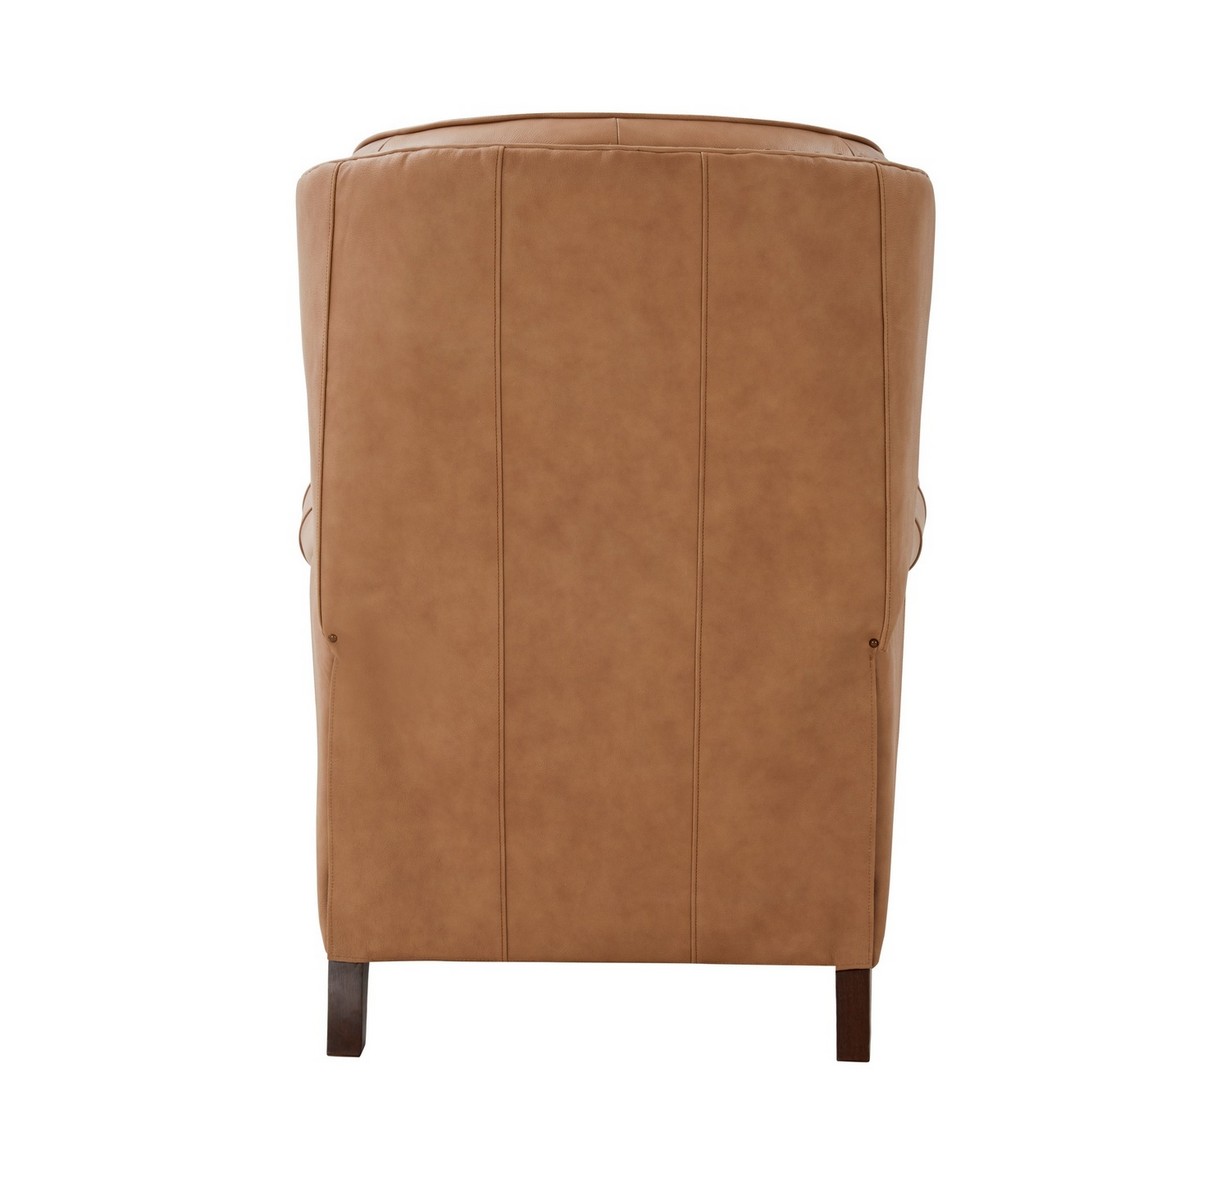 Barcalounger Kendall Recliner Chair - Prestin Tuscan Sun/All Leather